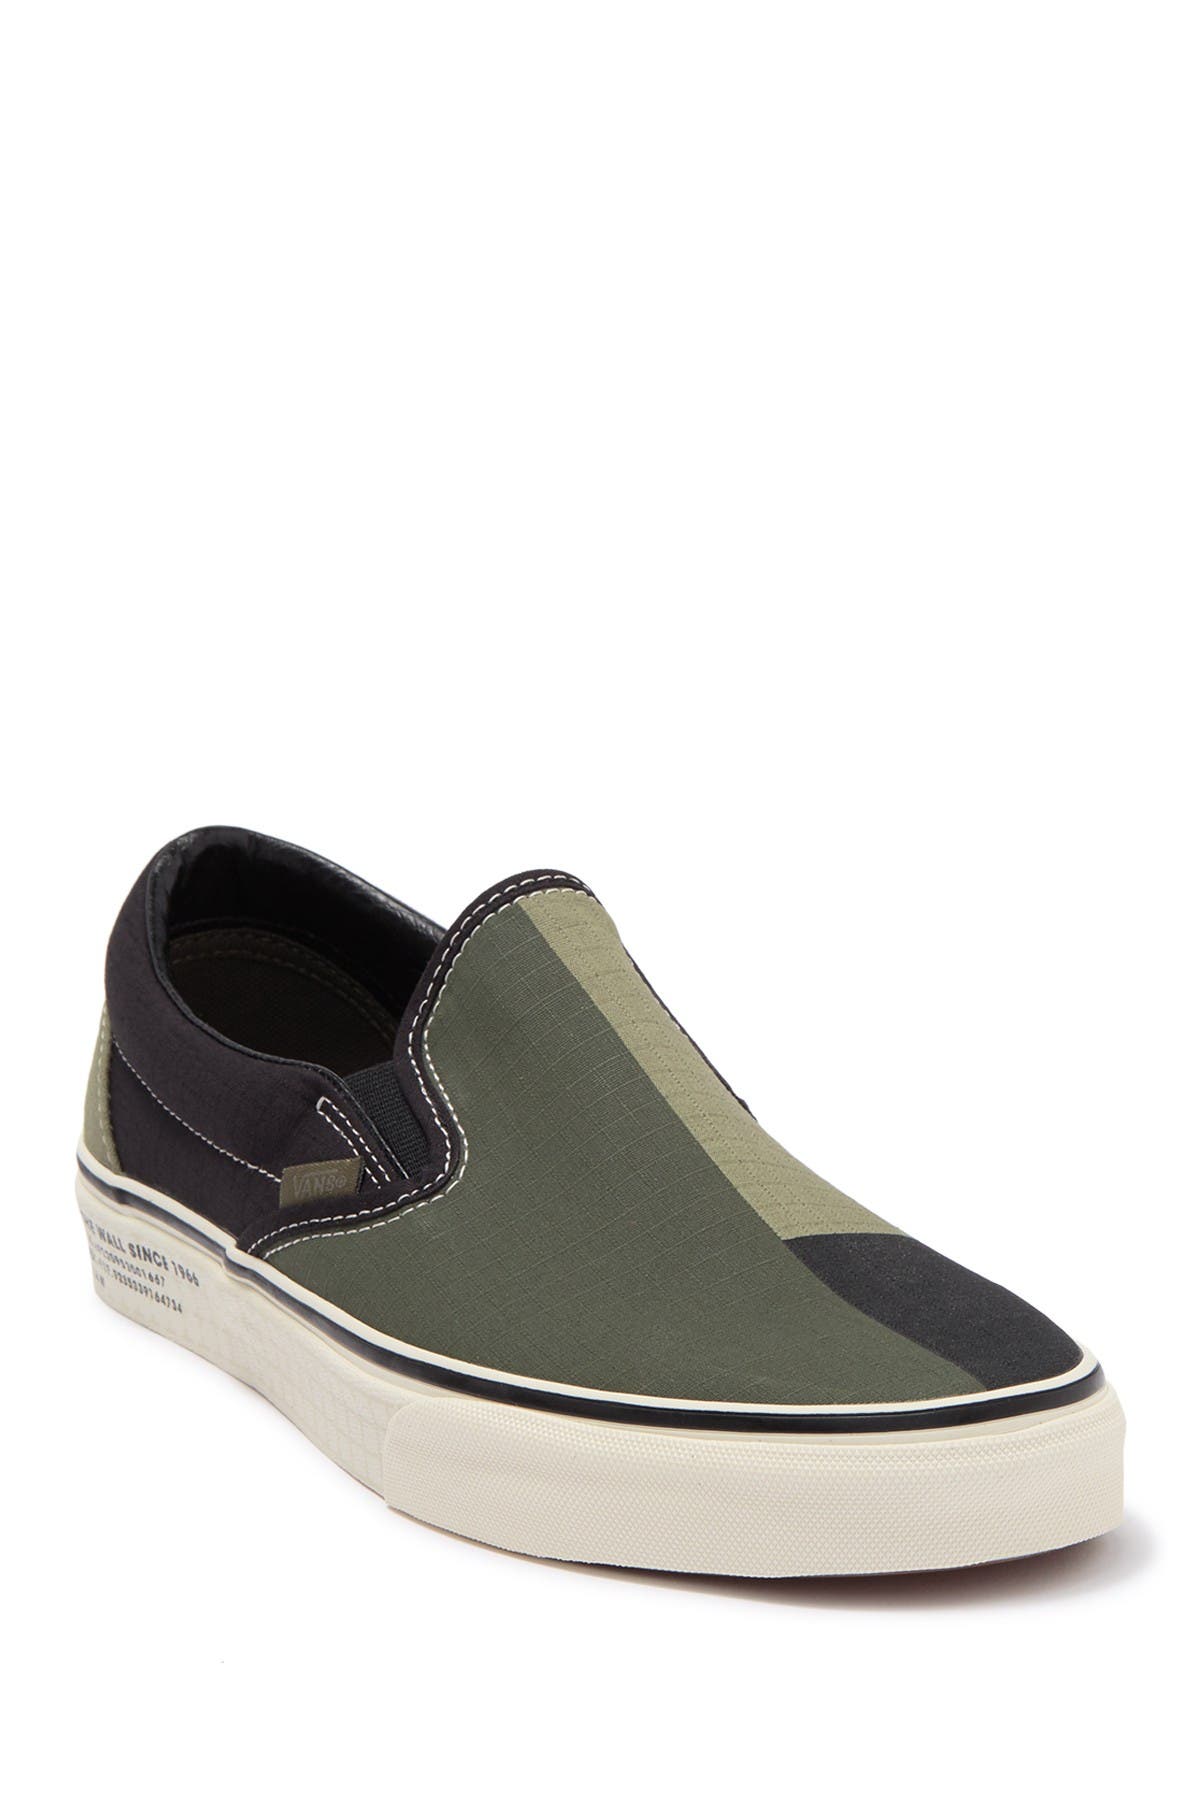 Vans Colorblock Slip-on Sneaker In Dark Green1